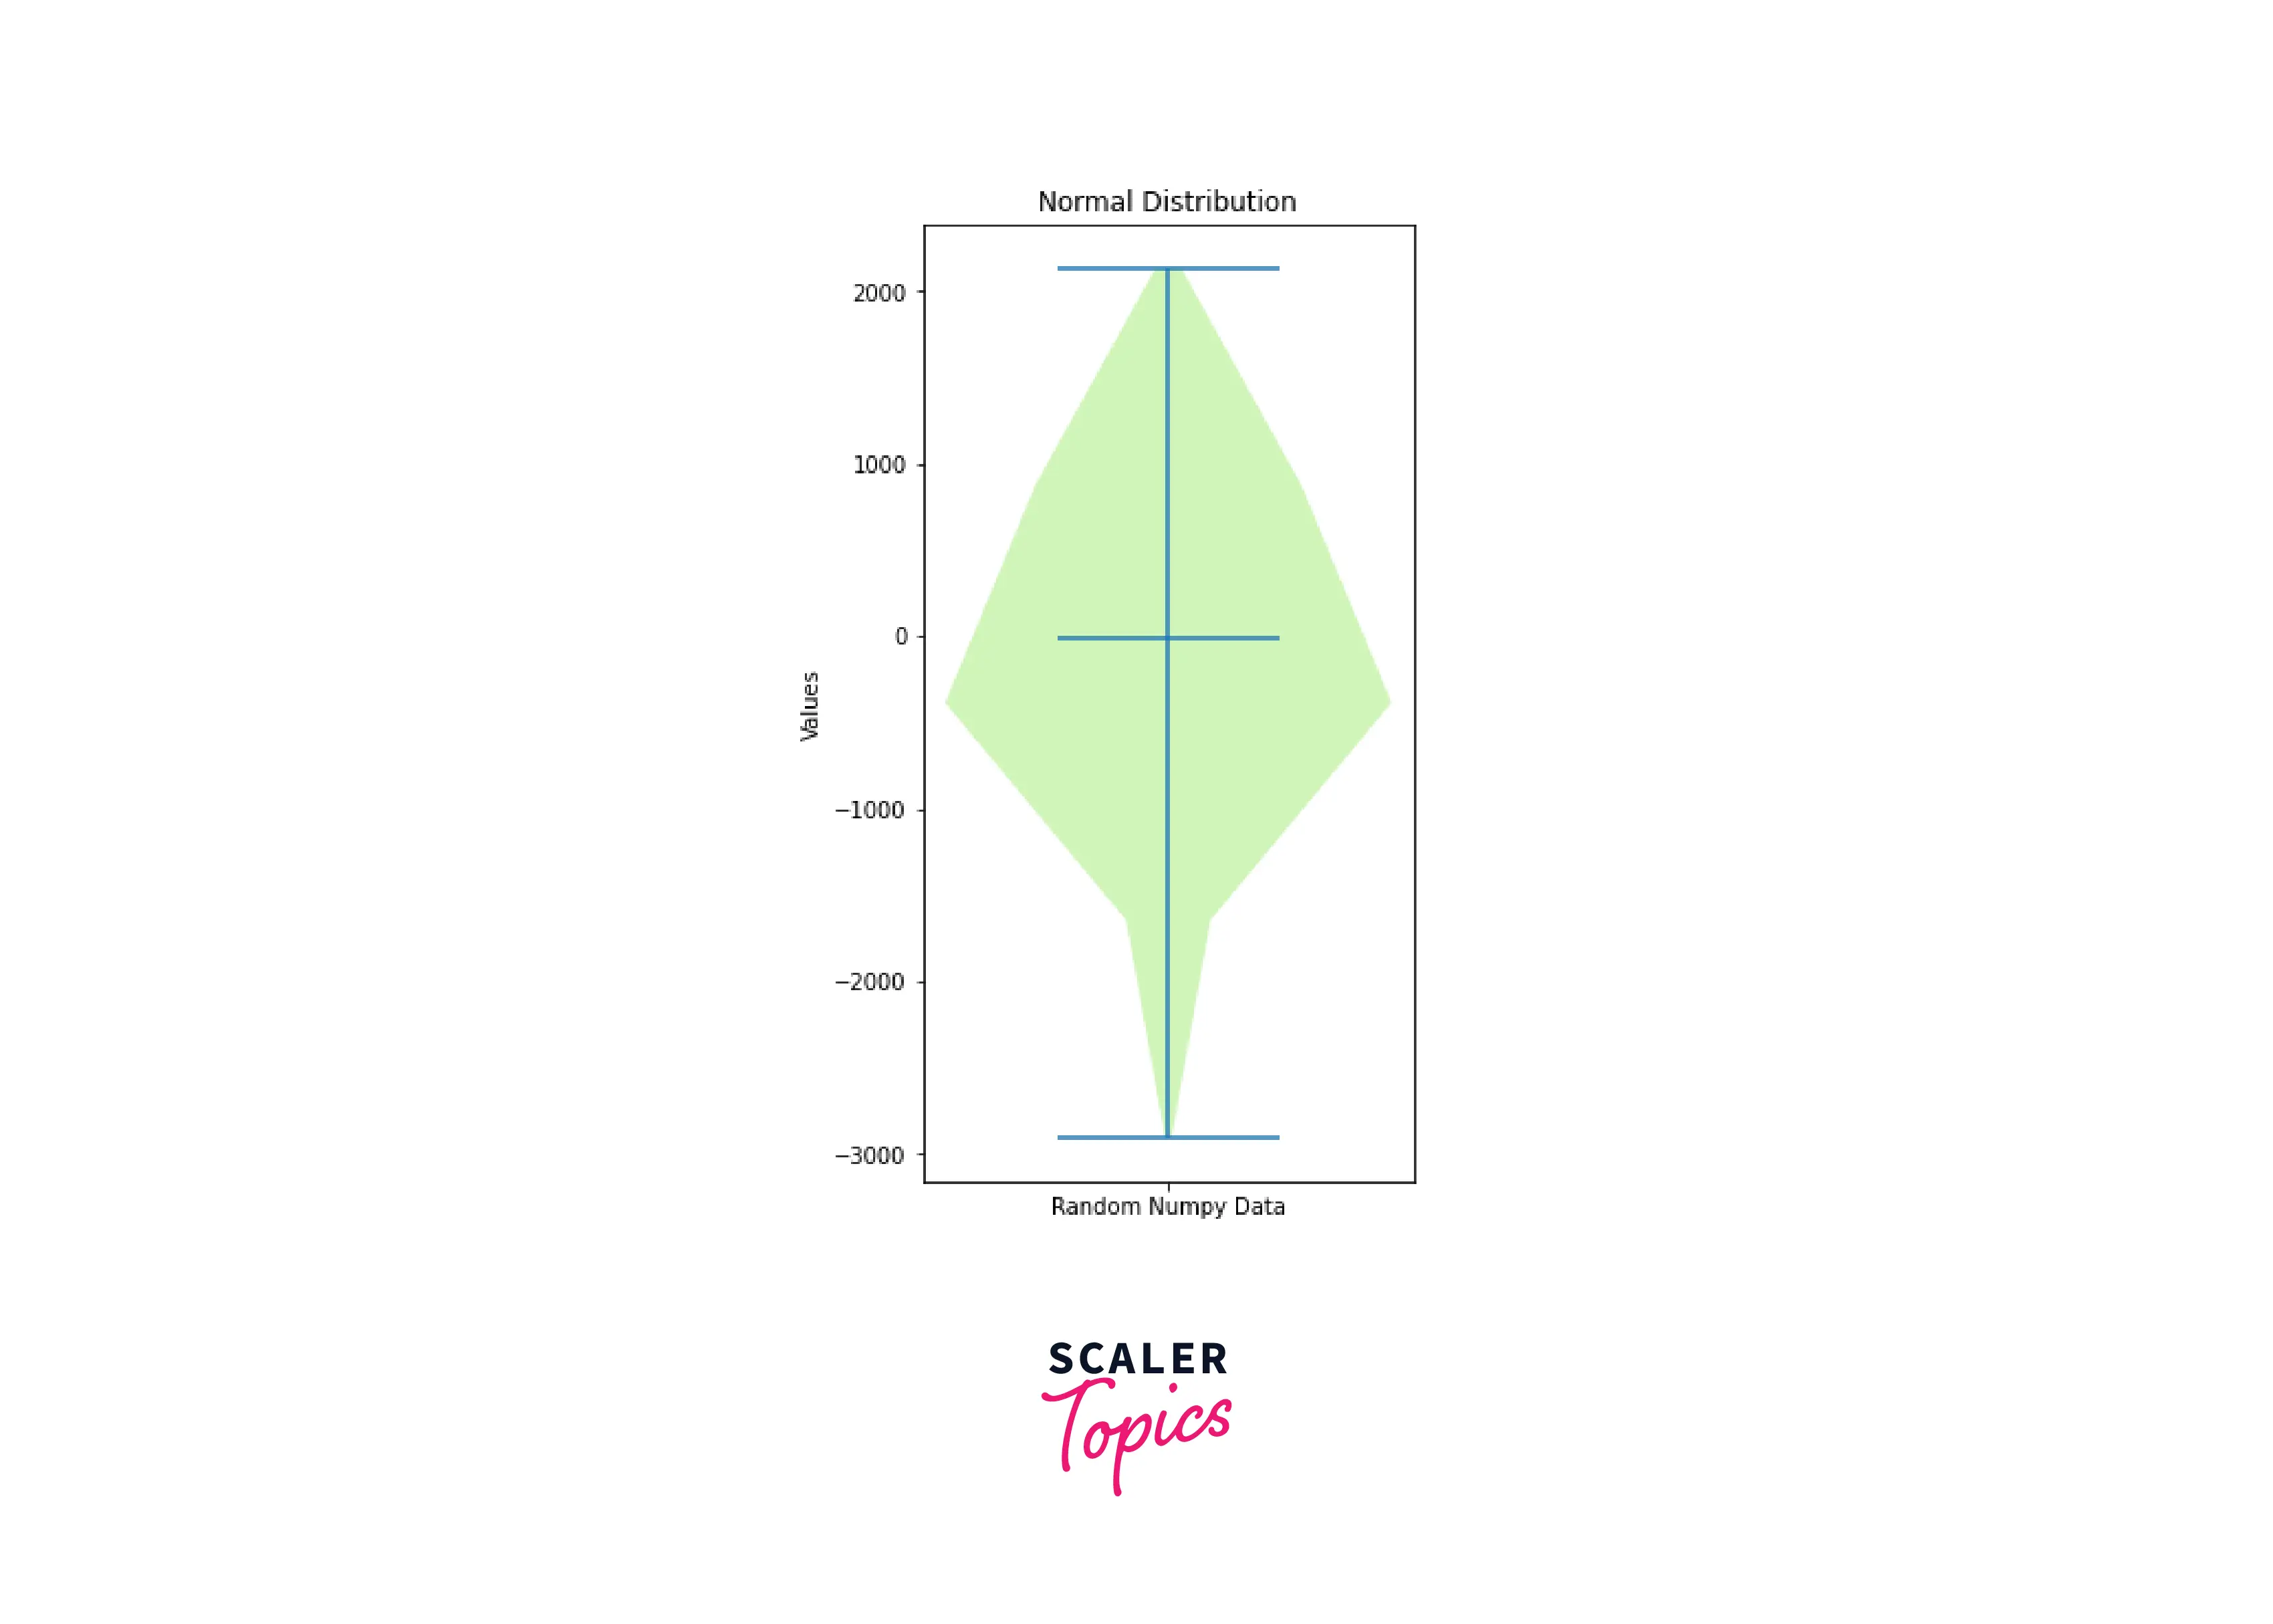 Violin plots with custom kernel density estimation size